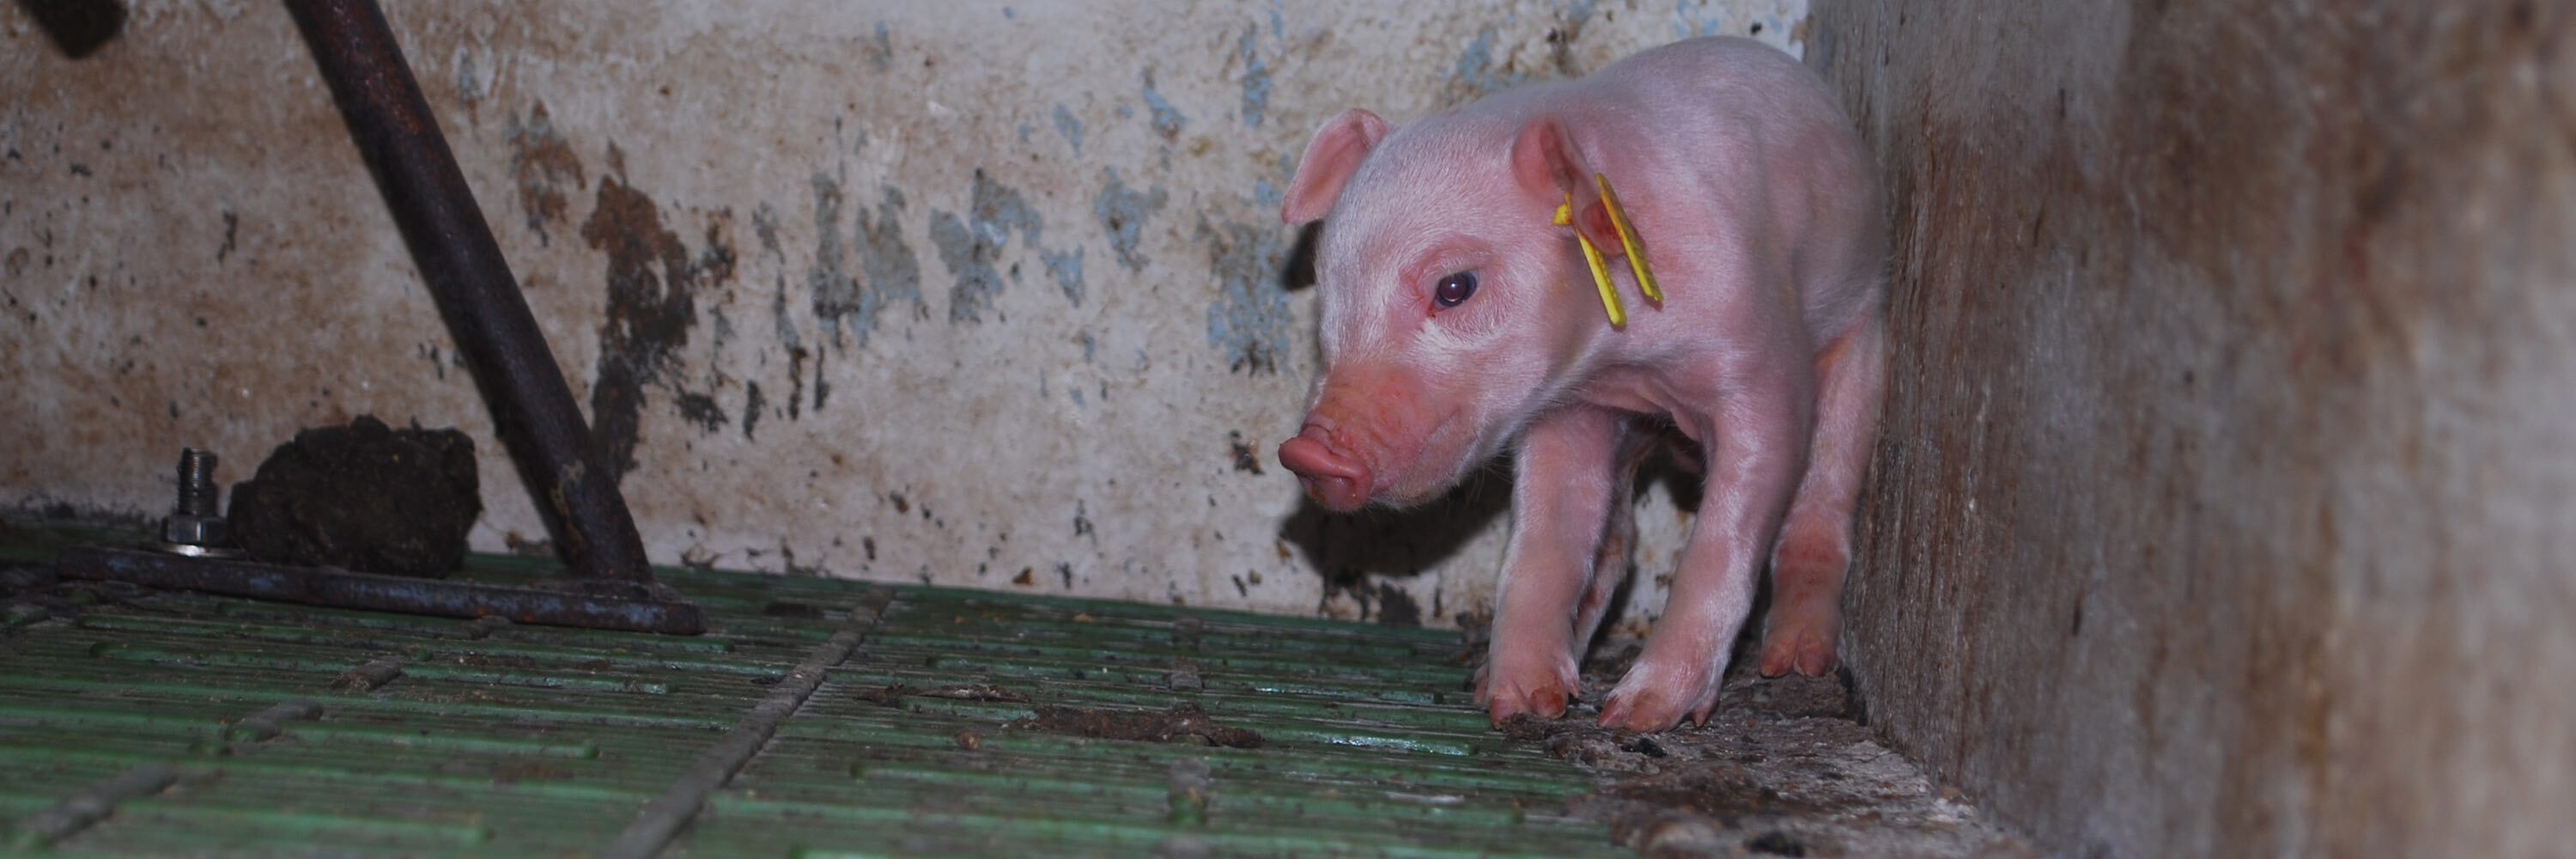 Cerdo en granja industrial